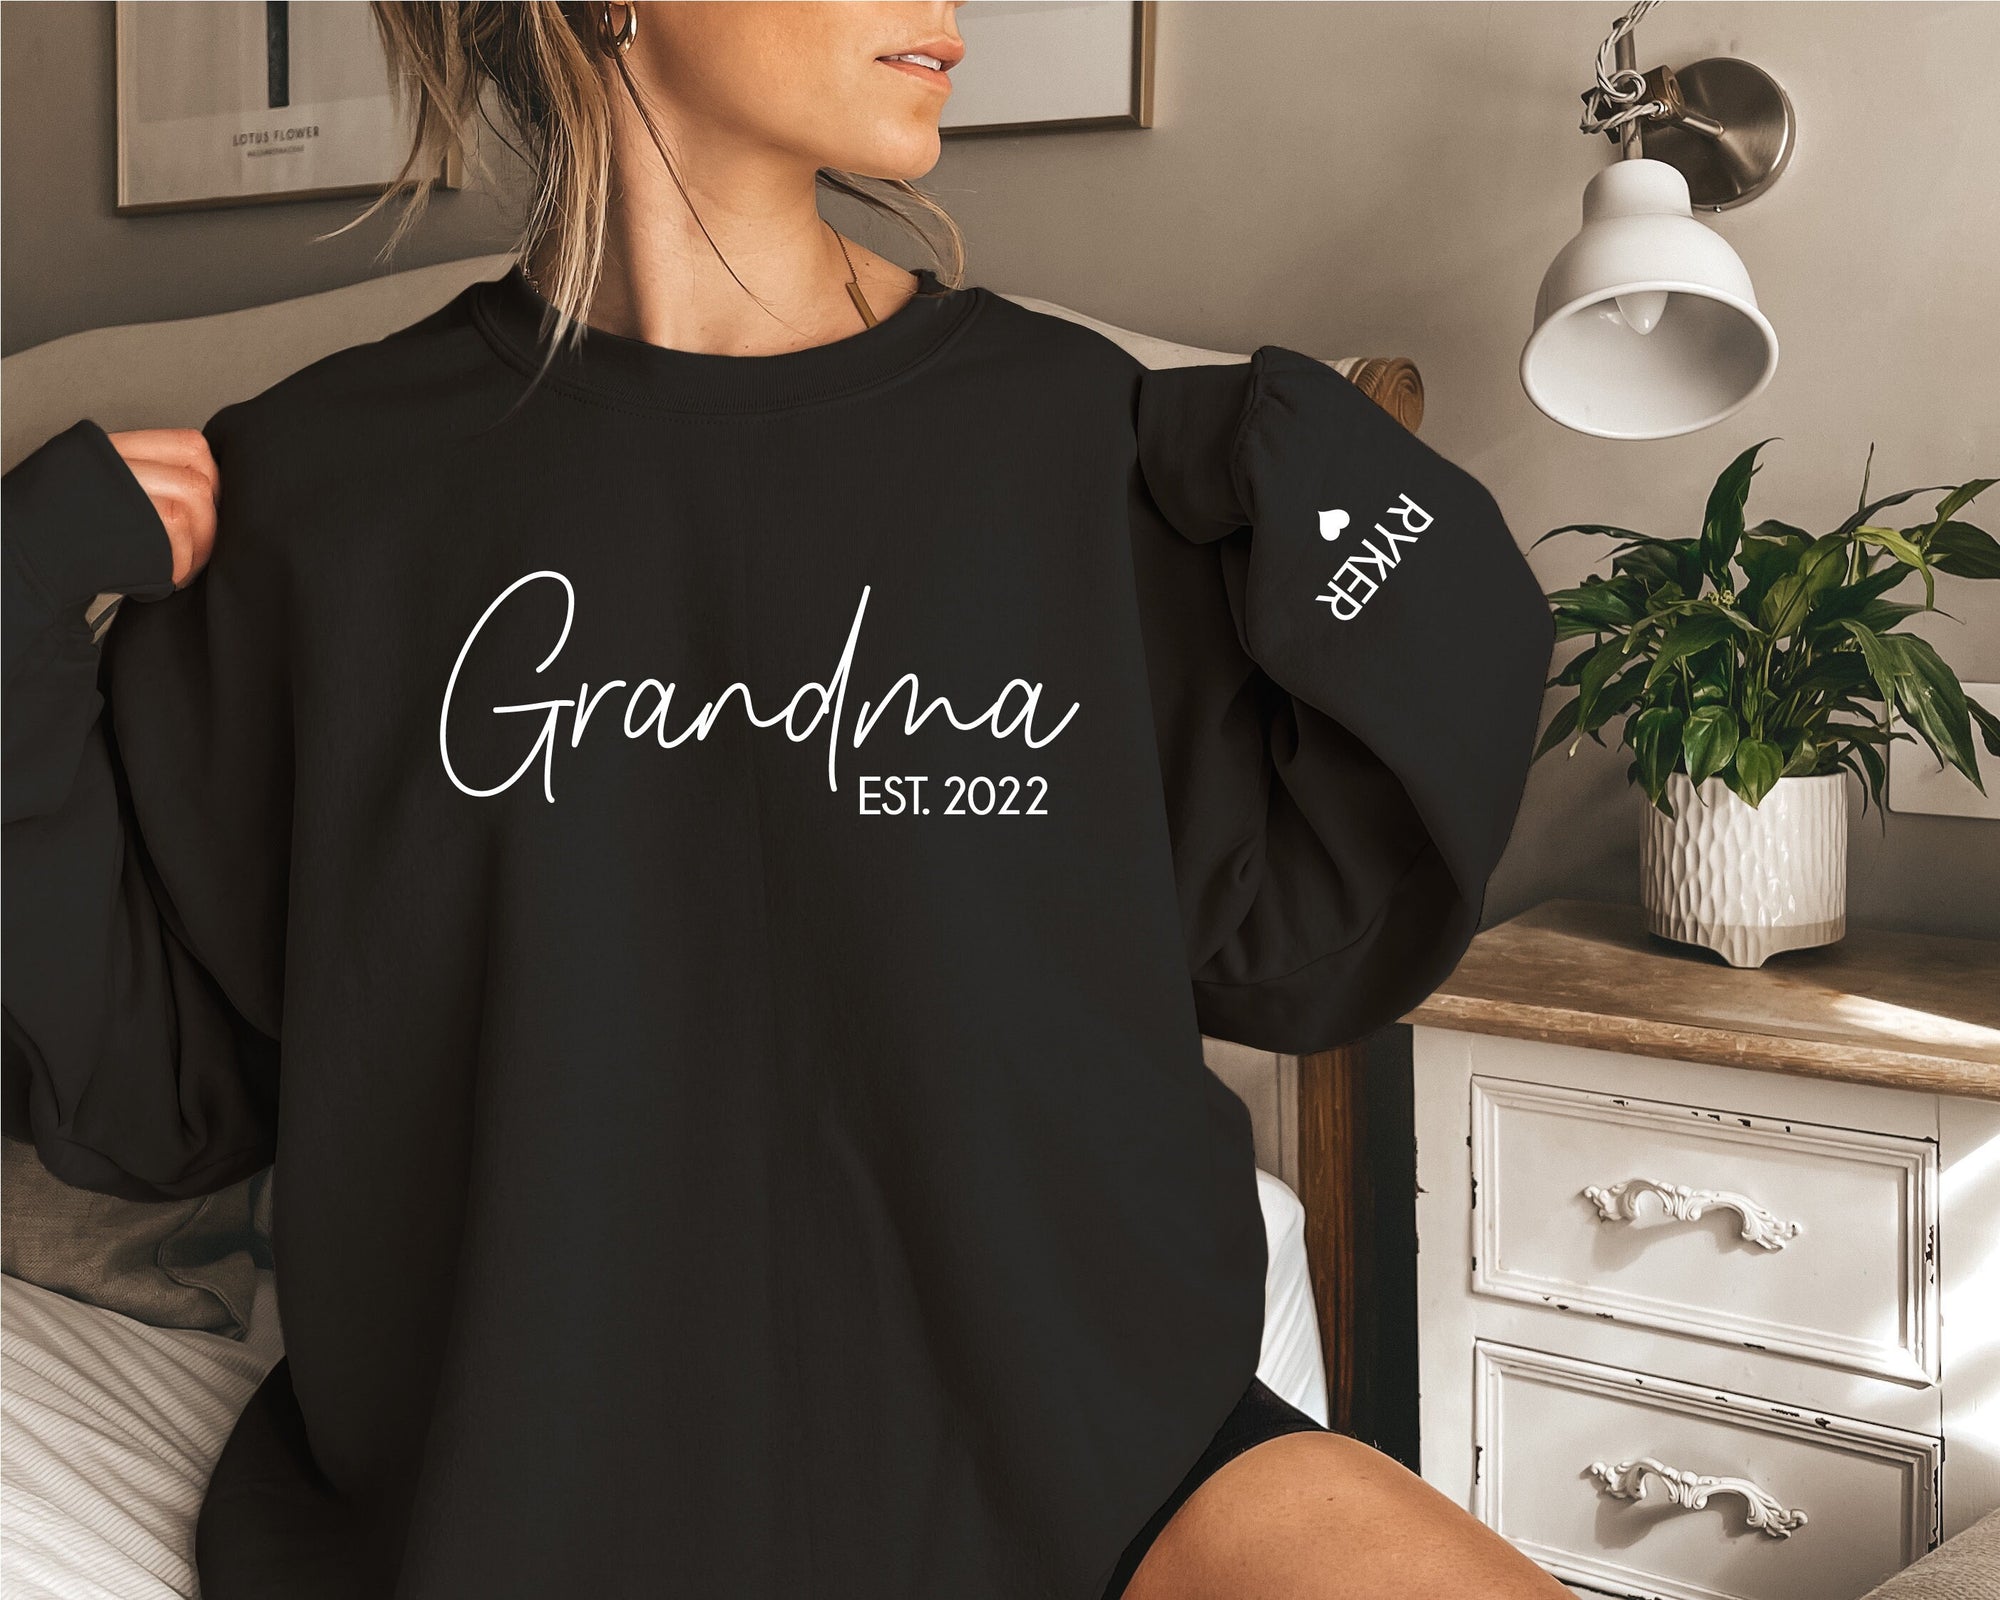 Grandma Sweatshirt With Date And Name On Sleeve, Grandma Est Sweatshirt, Mothers Day Gift, Personalised Gift, Mum Life Jumper, New Mum Gift